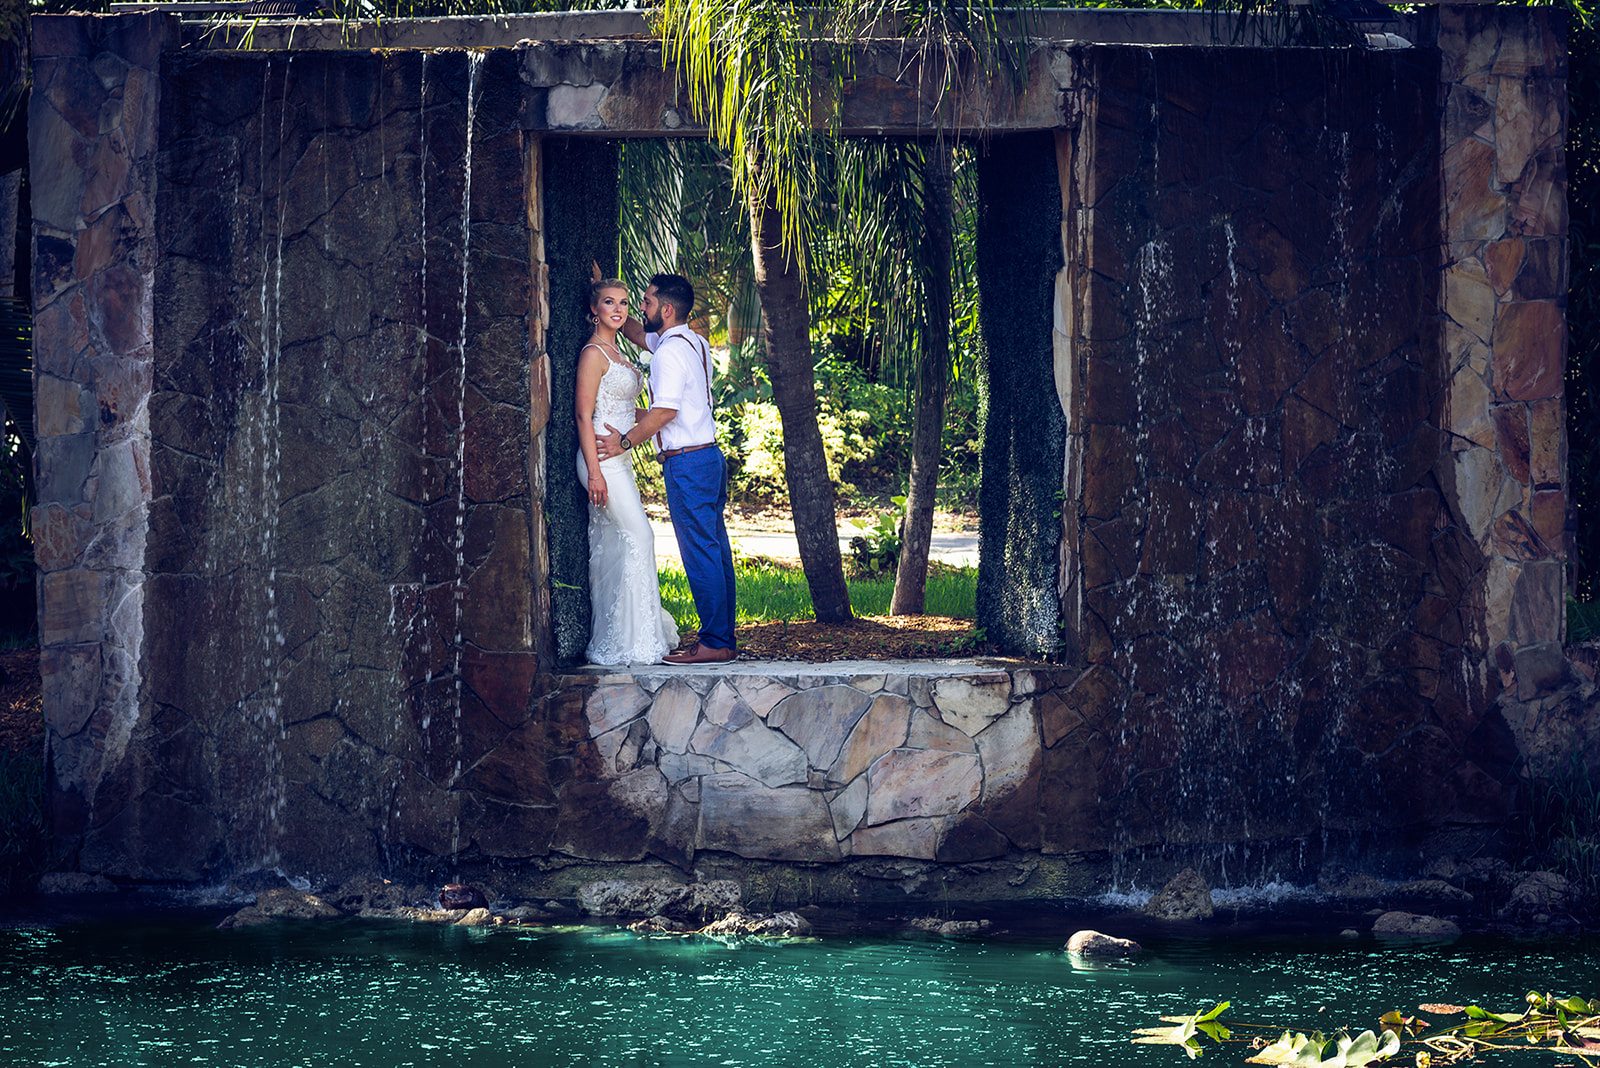 Florida Outdoor Wedding Photographer Cona Studios on Socialite Event Planning